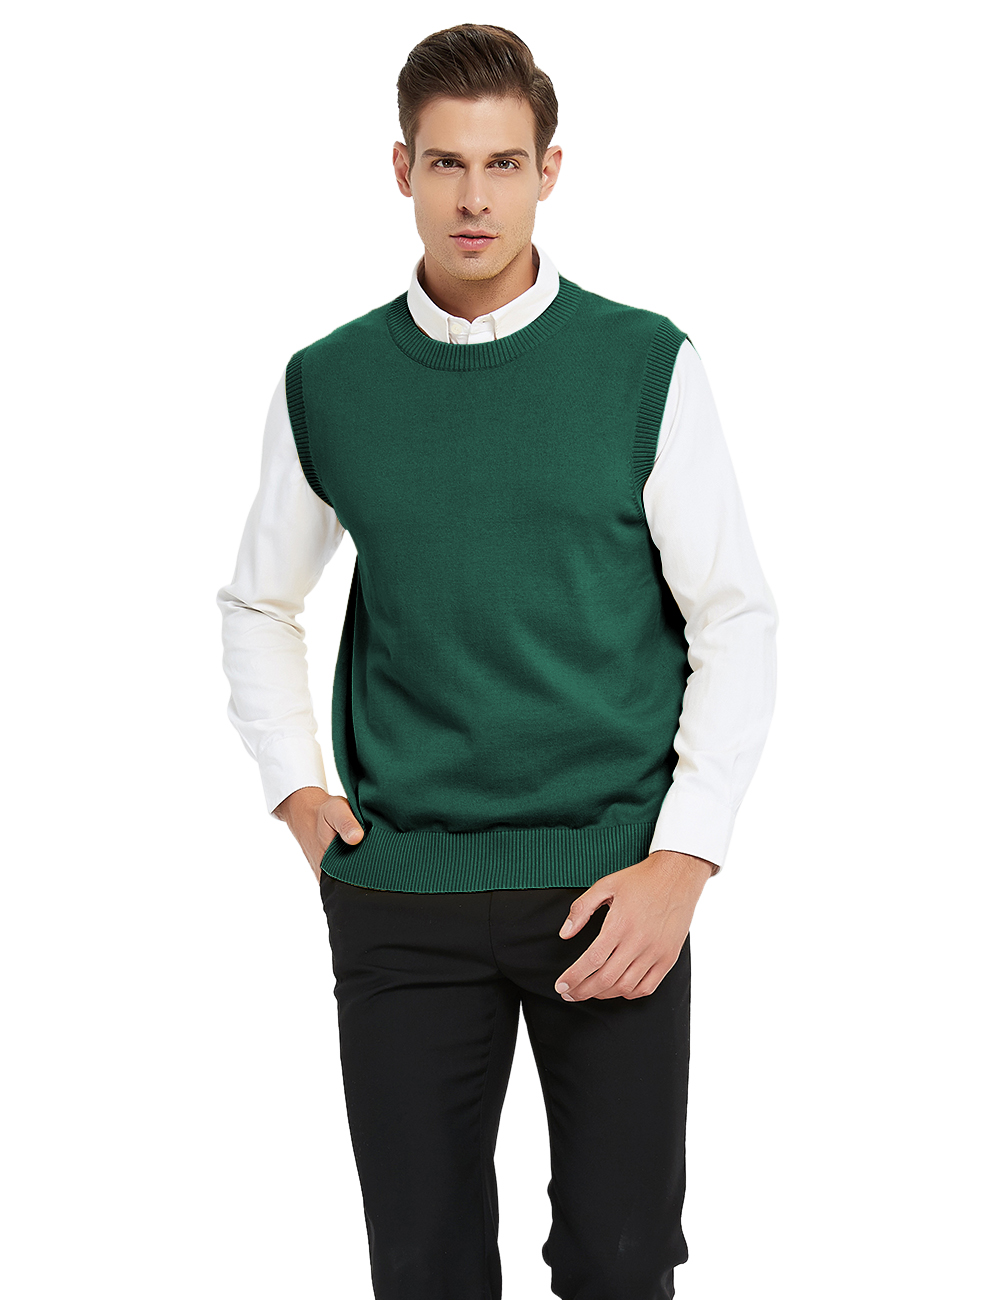 Toptie Men's Business Sweater Vest Cotton Jumper Top-Green-S - image 2 of 7